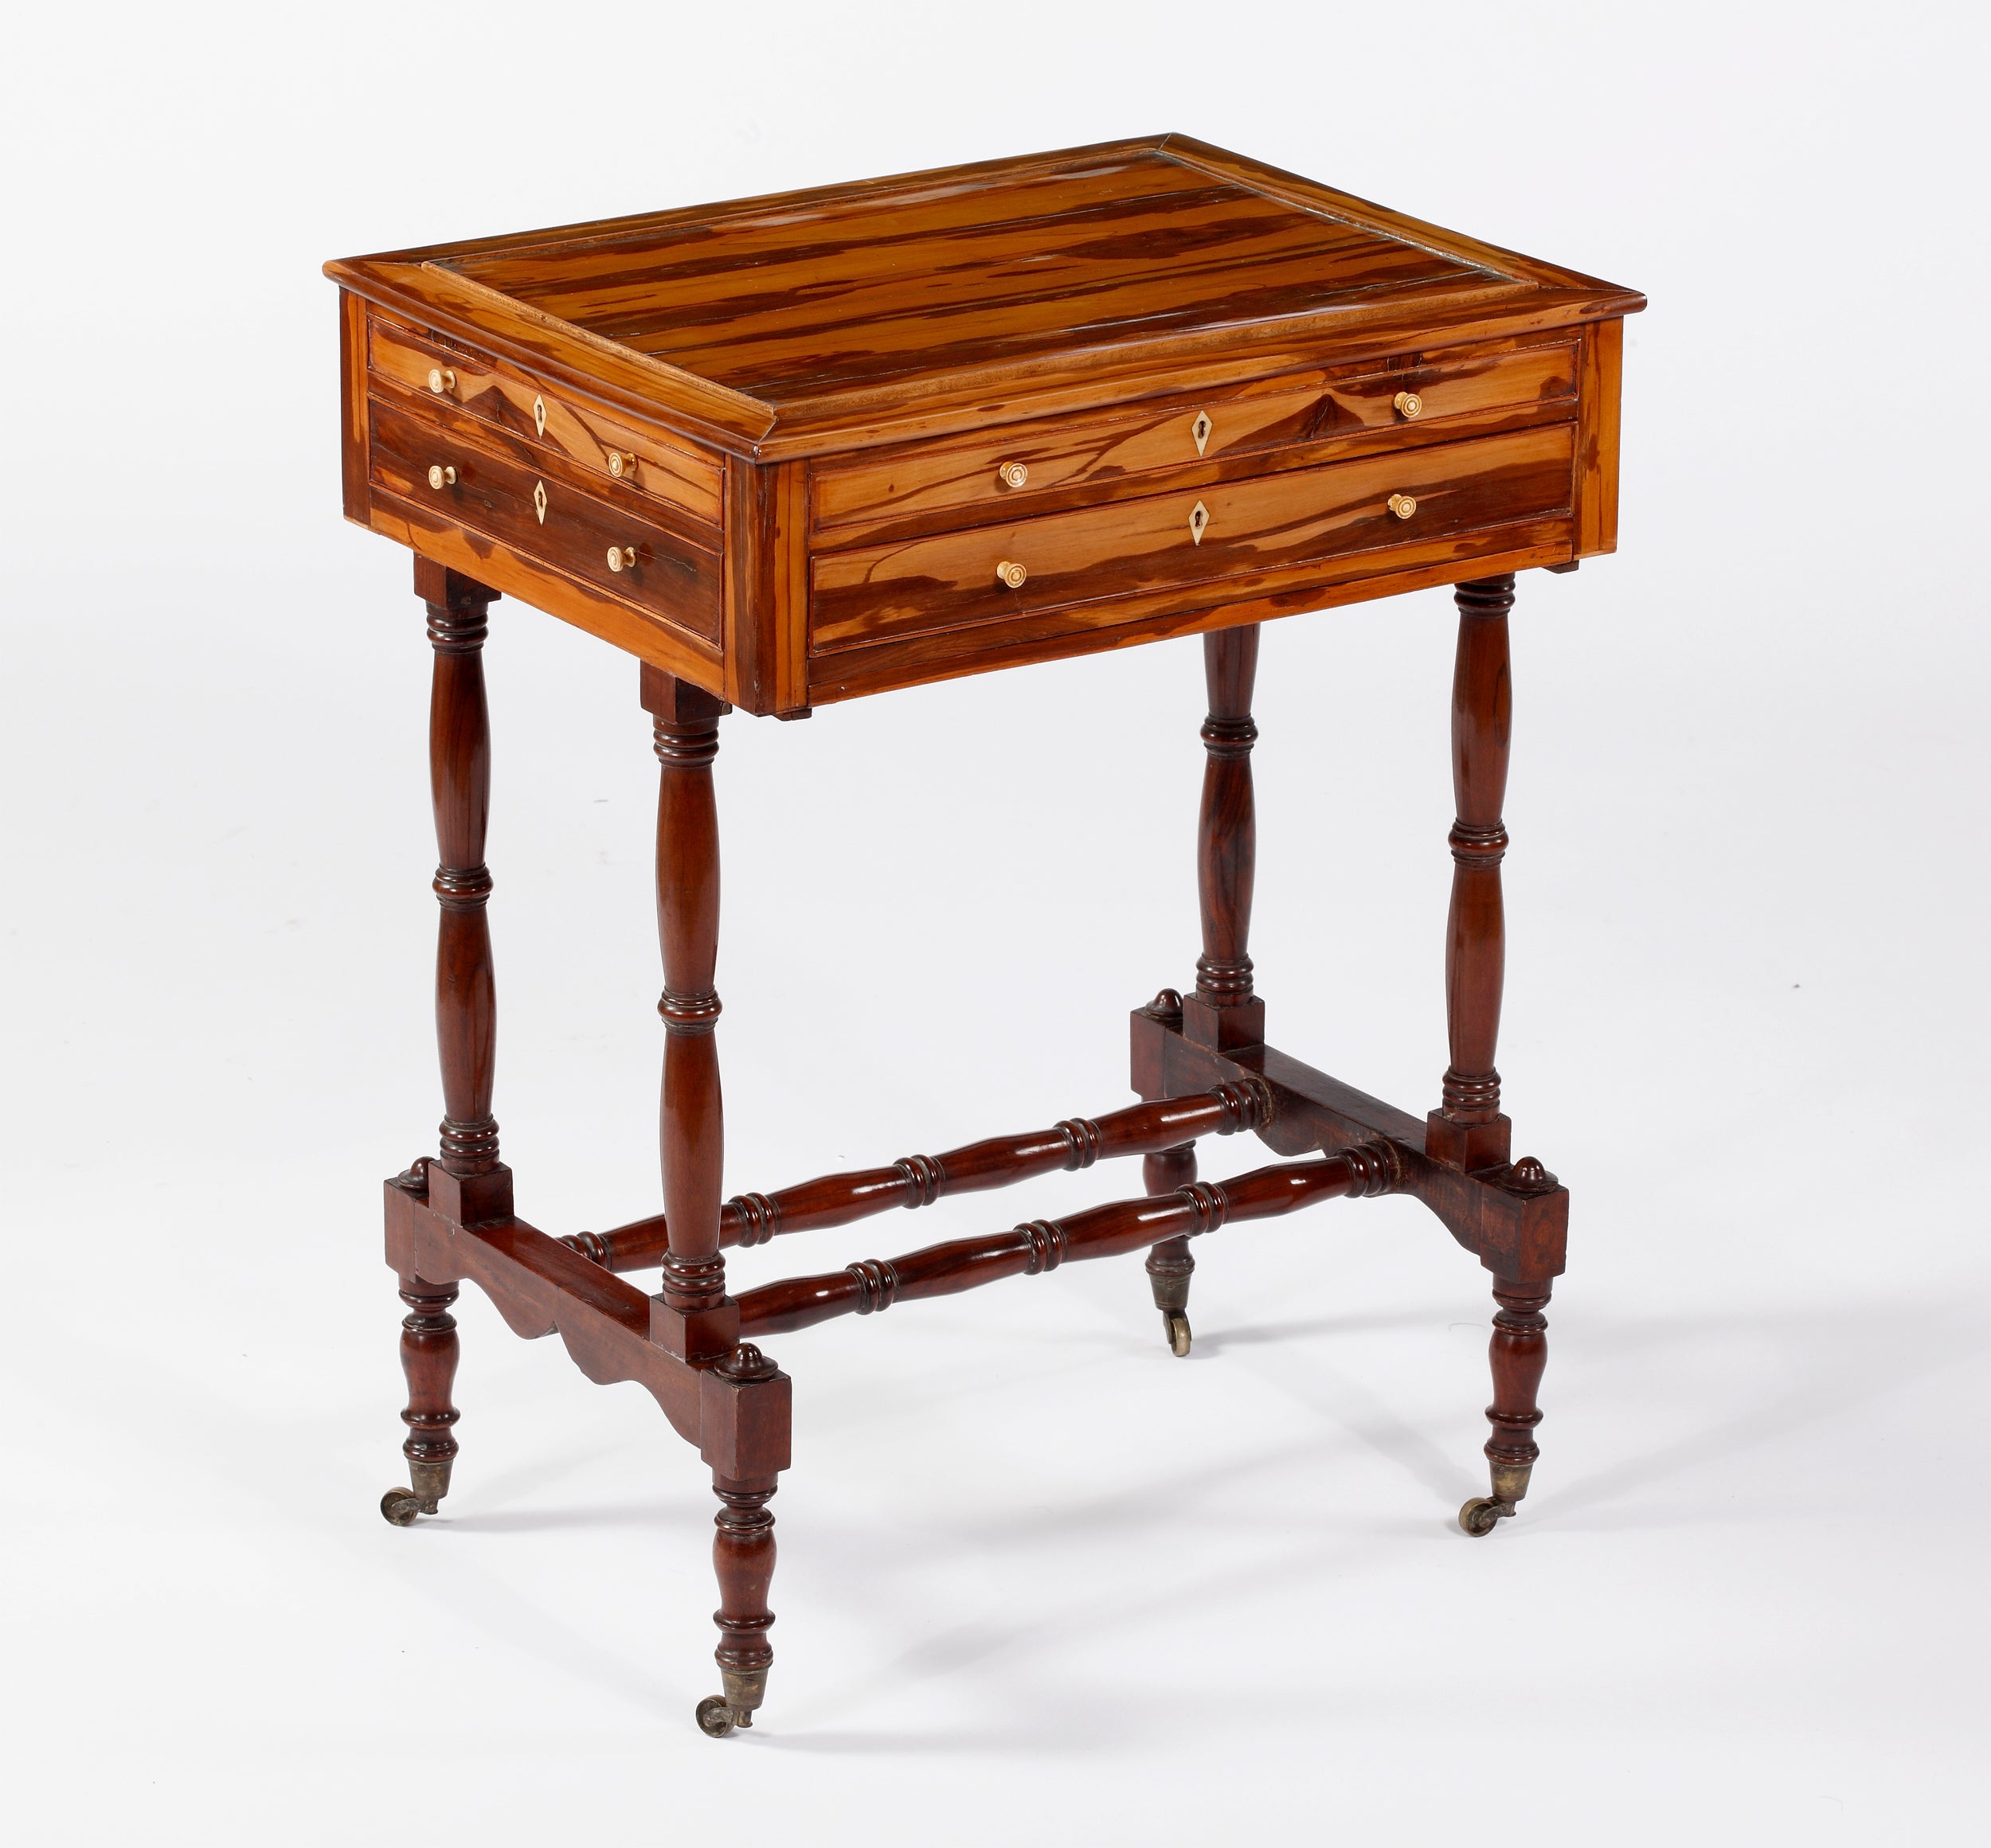 A Fine Regency Calamander, Mahogany, & Satinwood “Tric Trac” Table